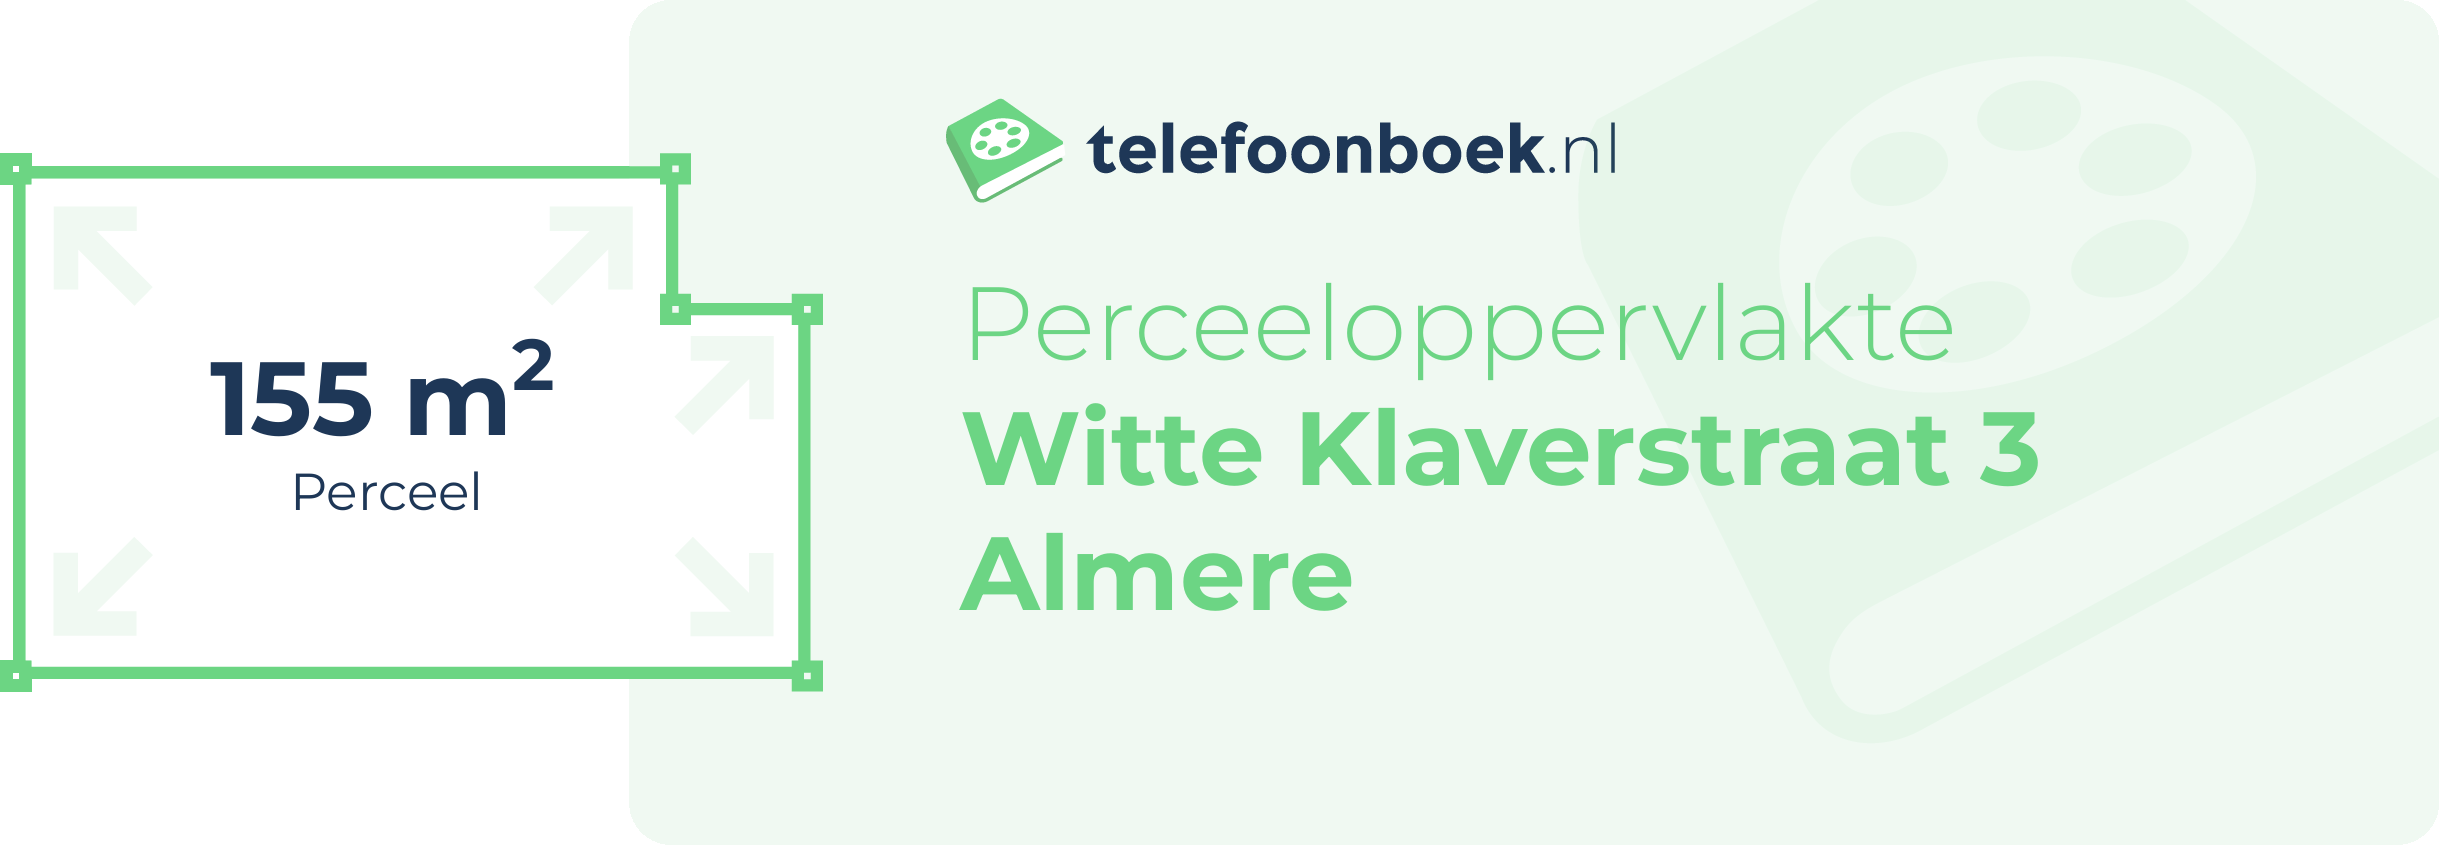 Perceeloppervlakte Witte Klaverstraat 3 Almere